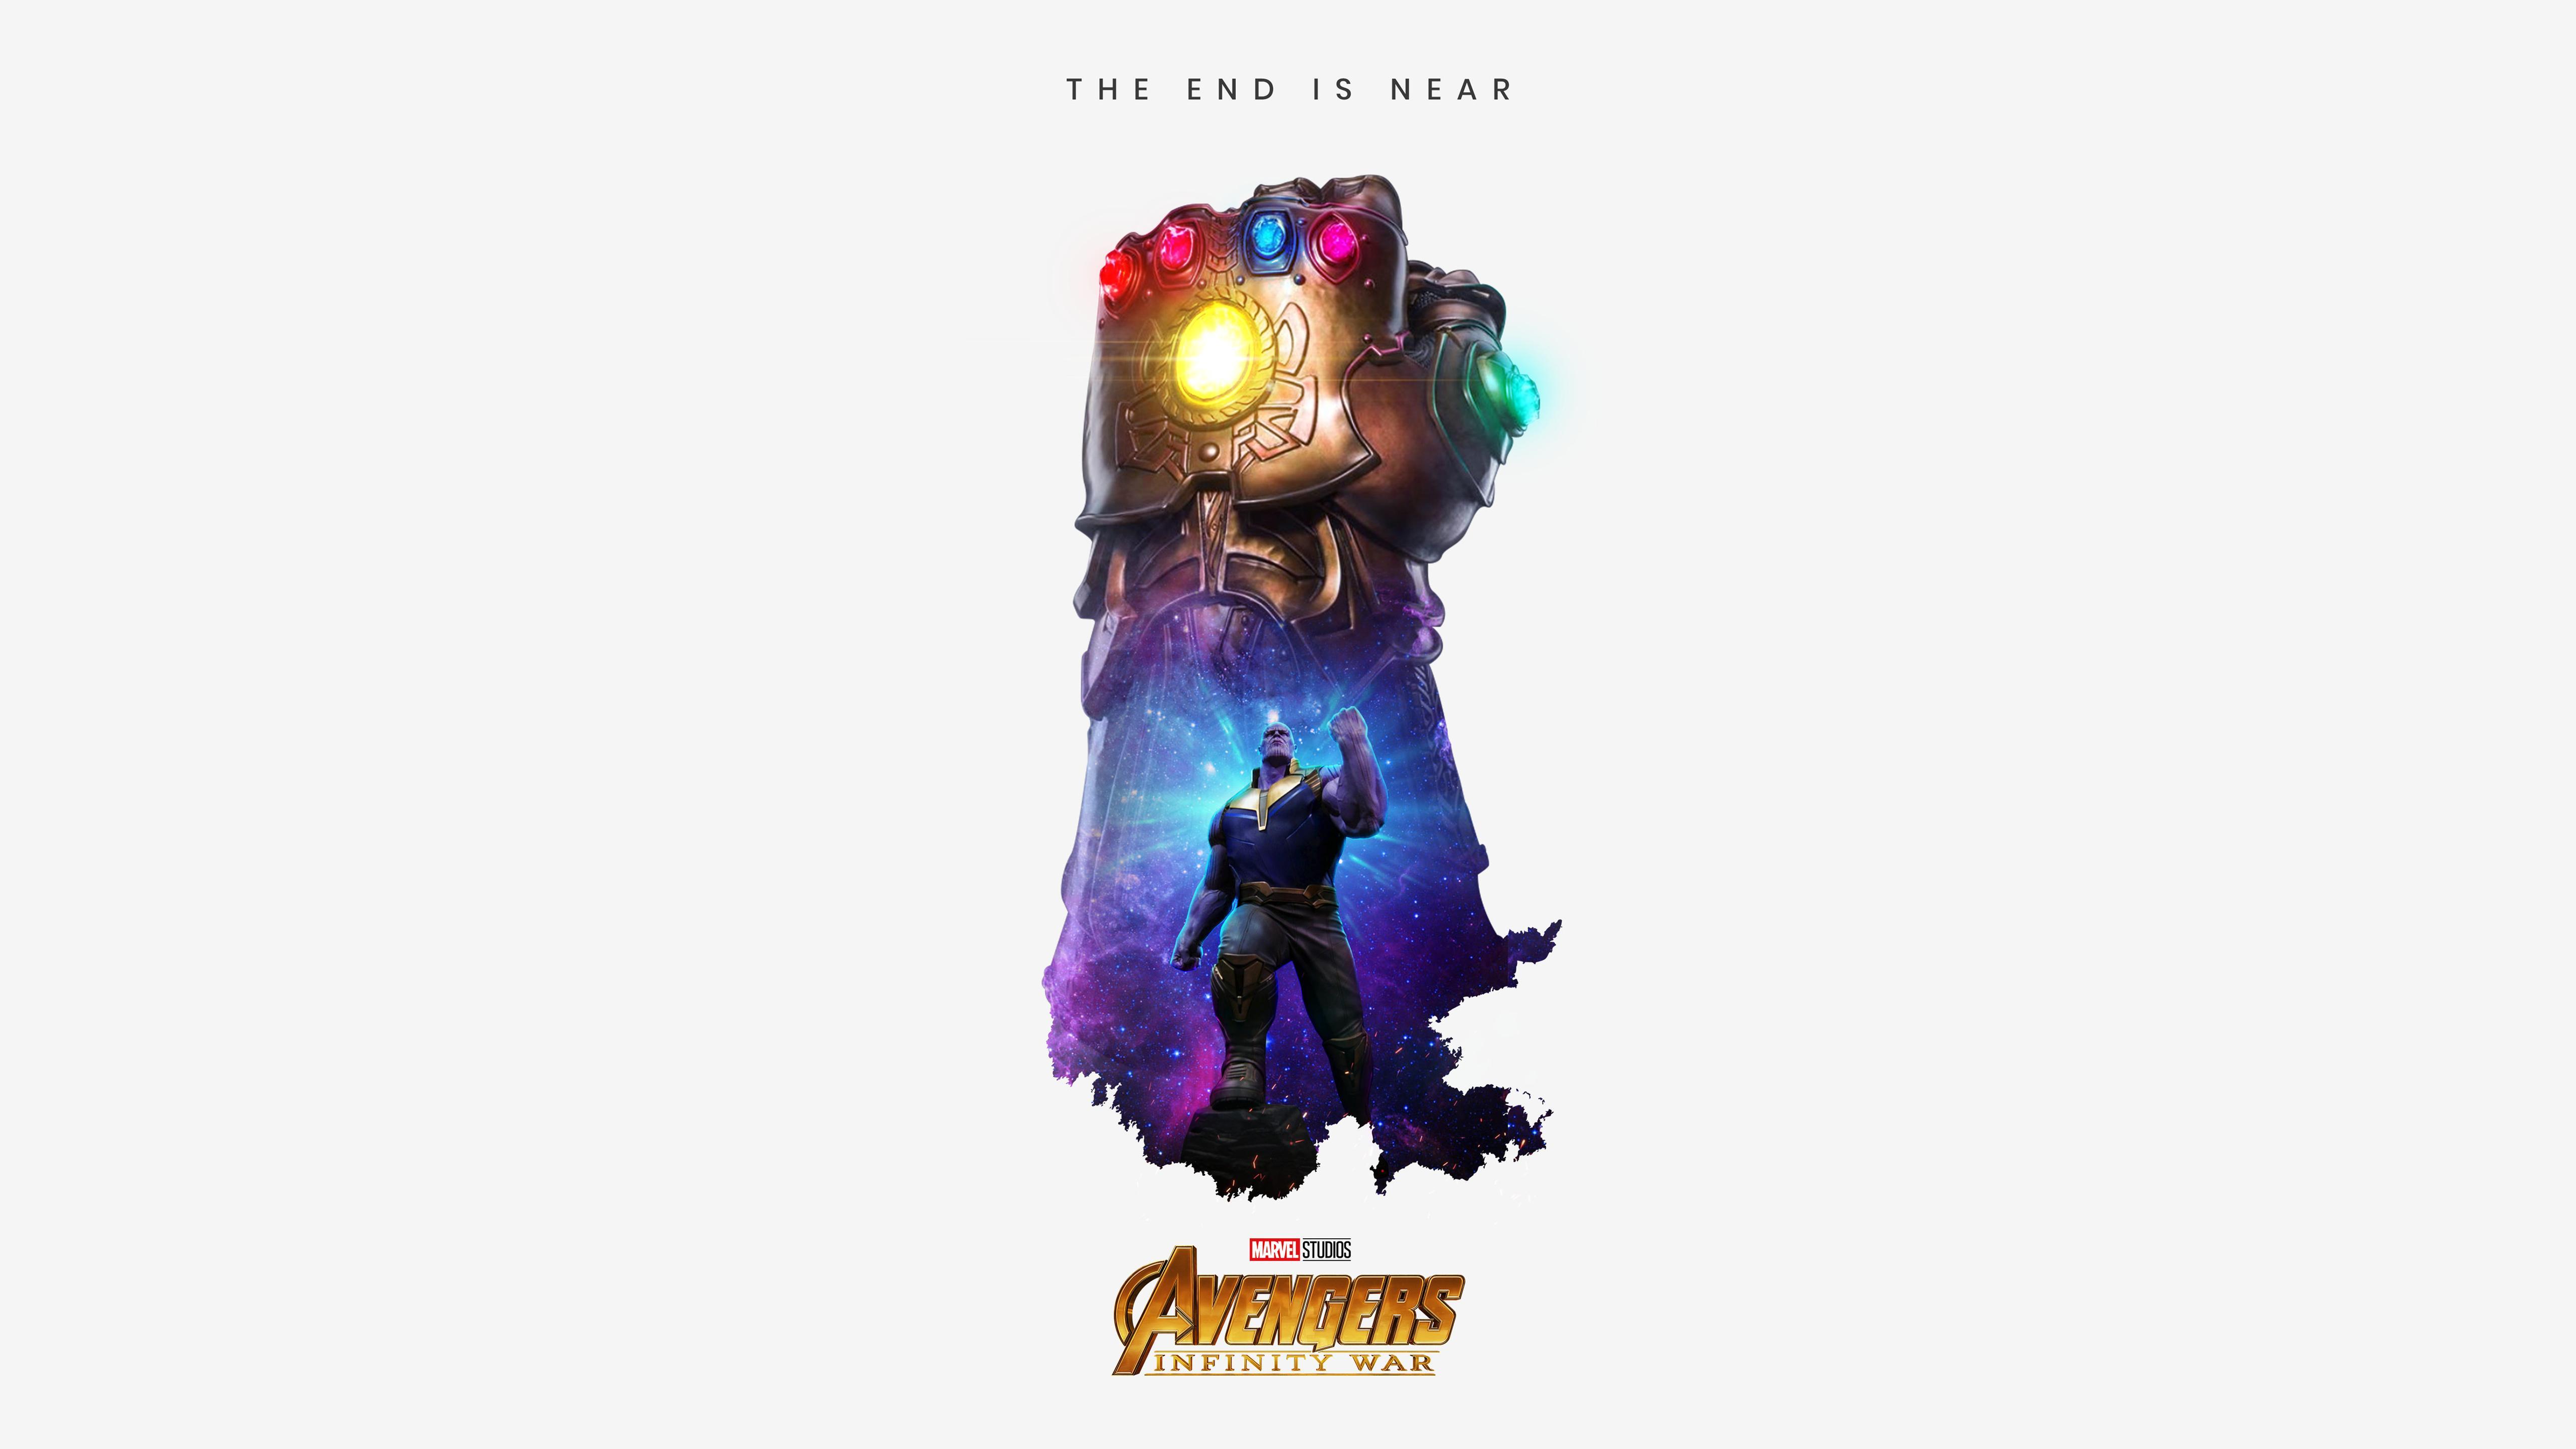 Thanos Infinity Gauntlet Artwork 5K Wallpaper